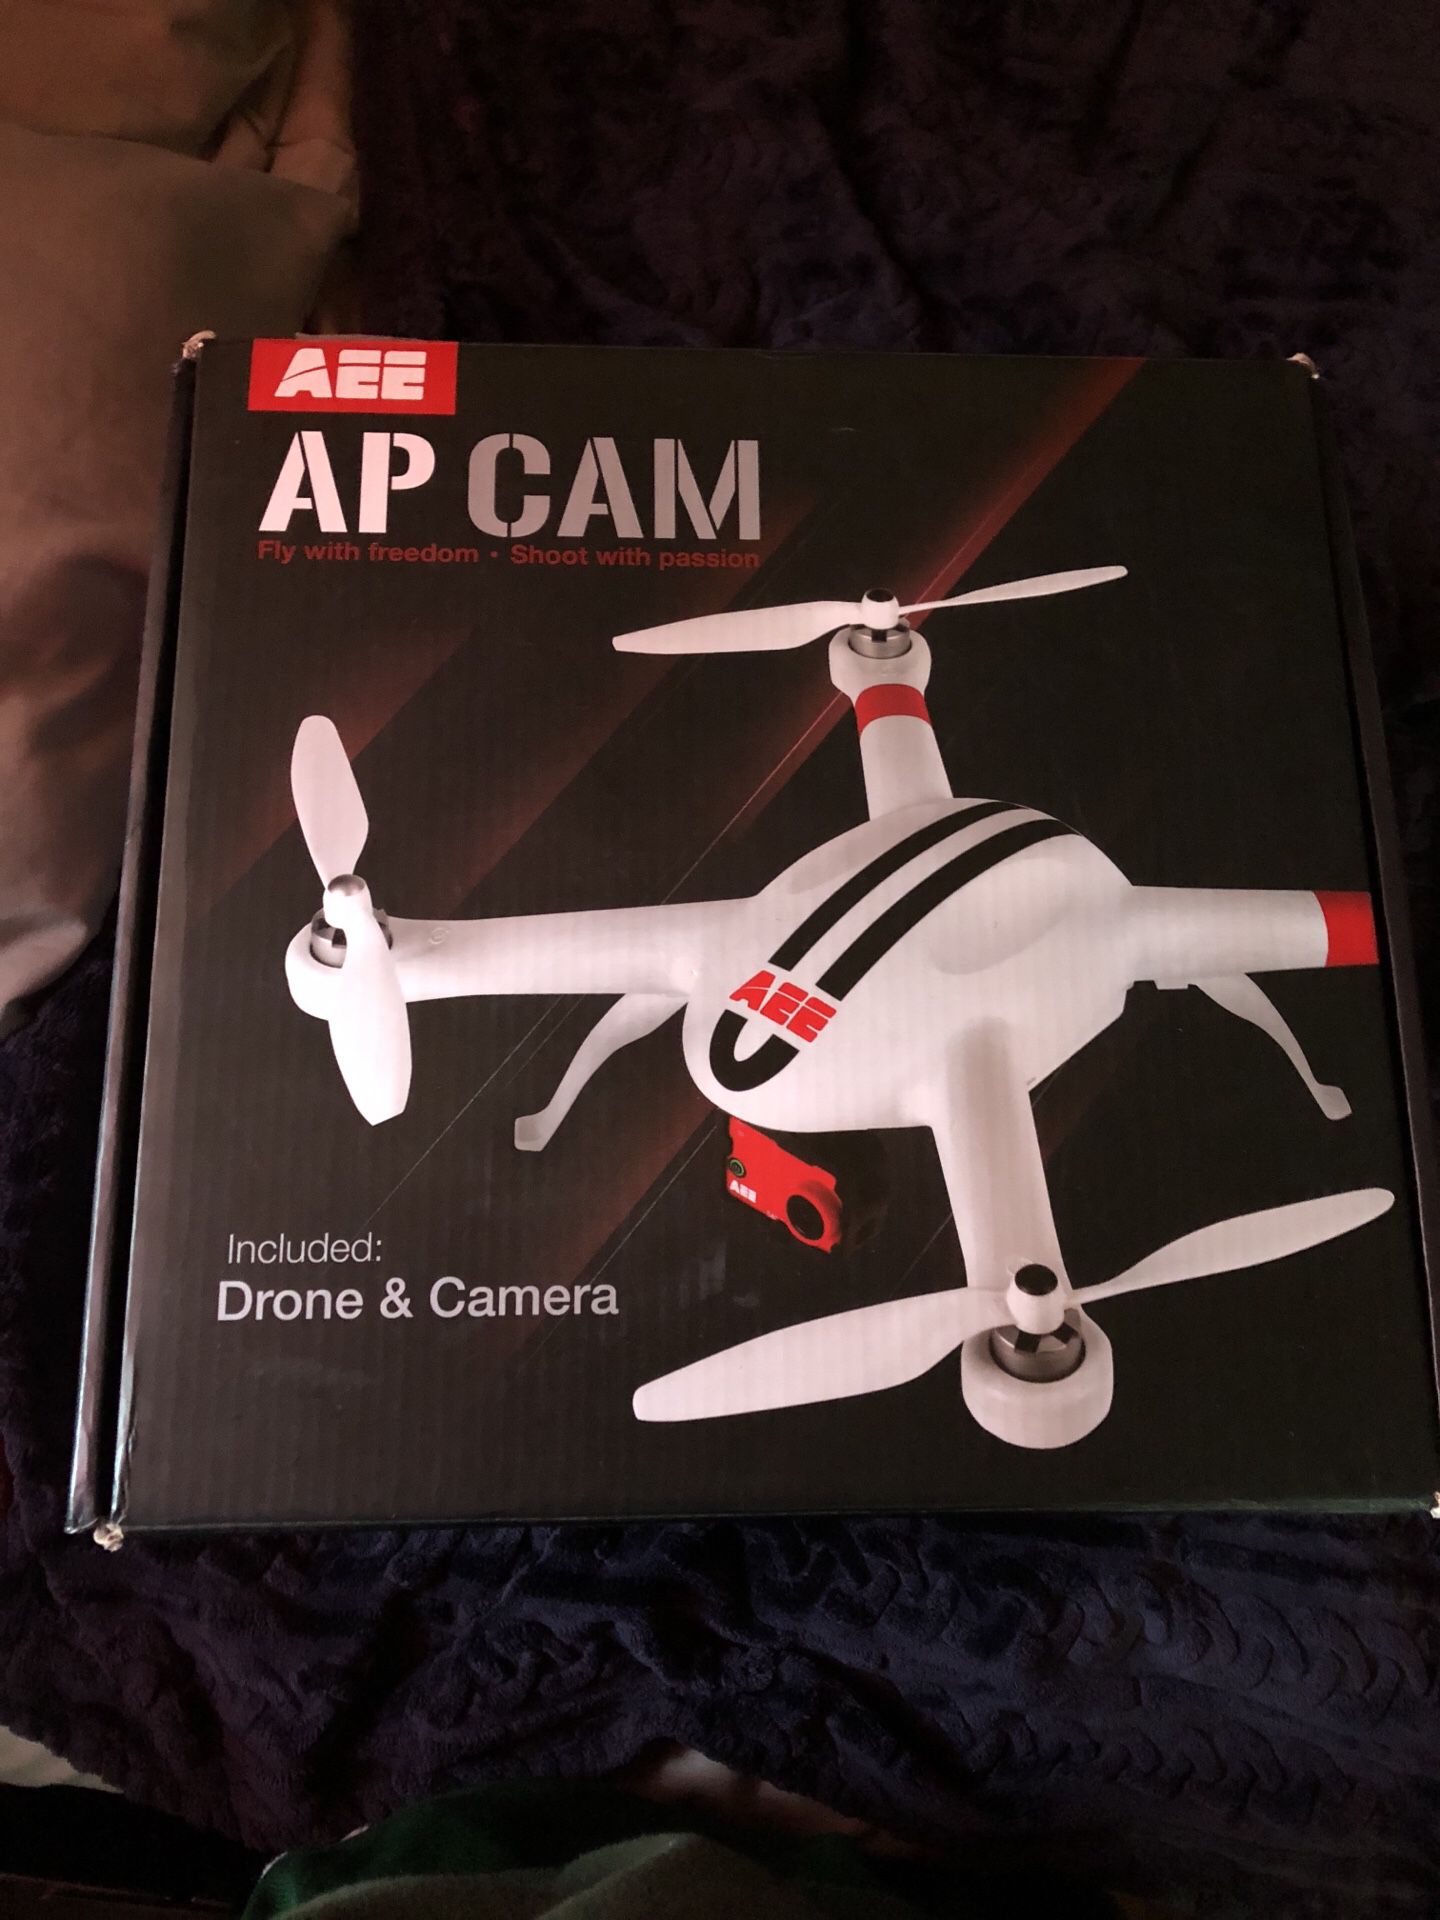 AP CAM Pro Aee drone